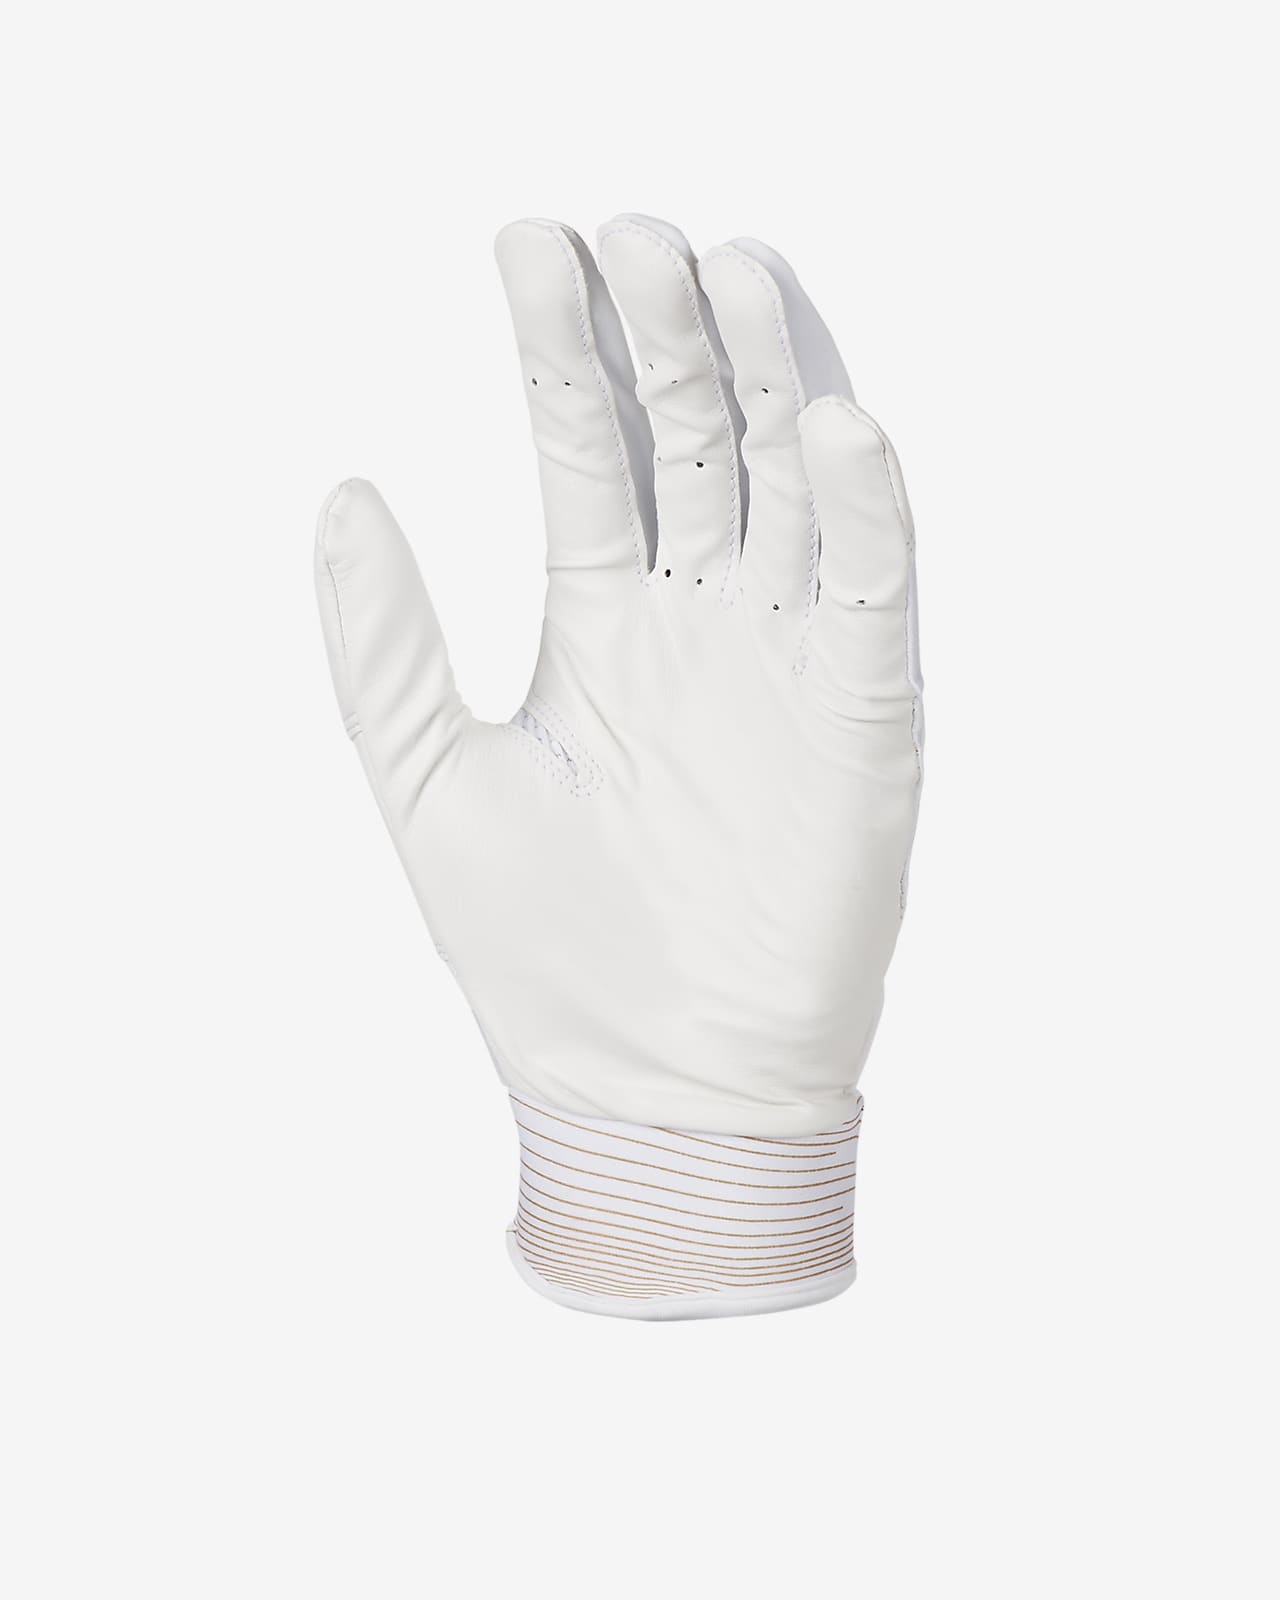 nike alpha grip gloves